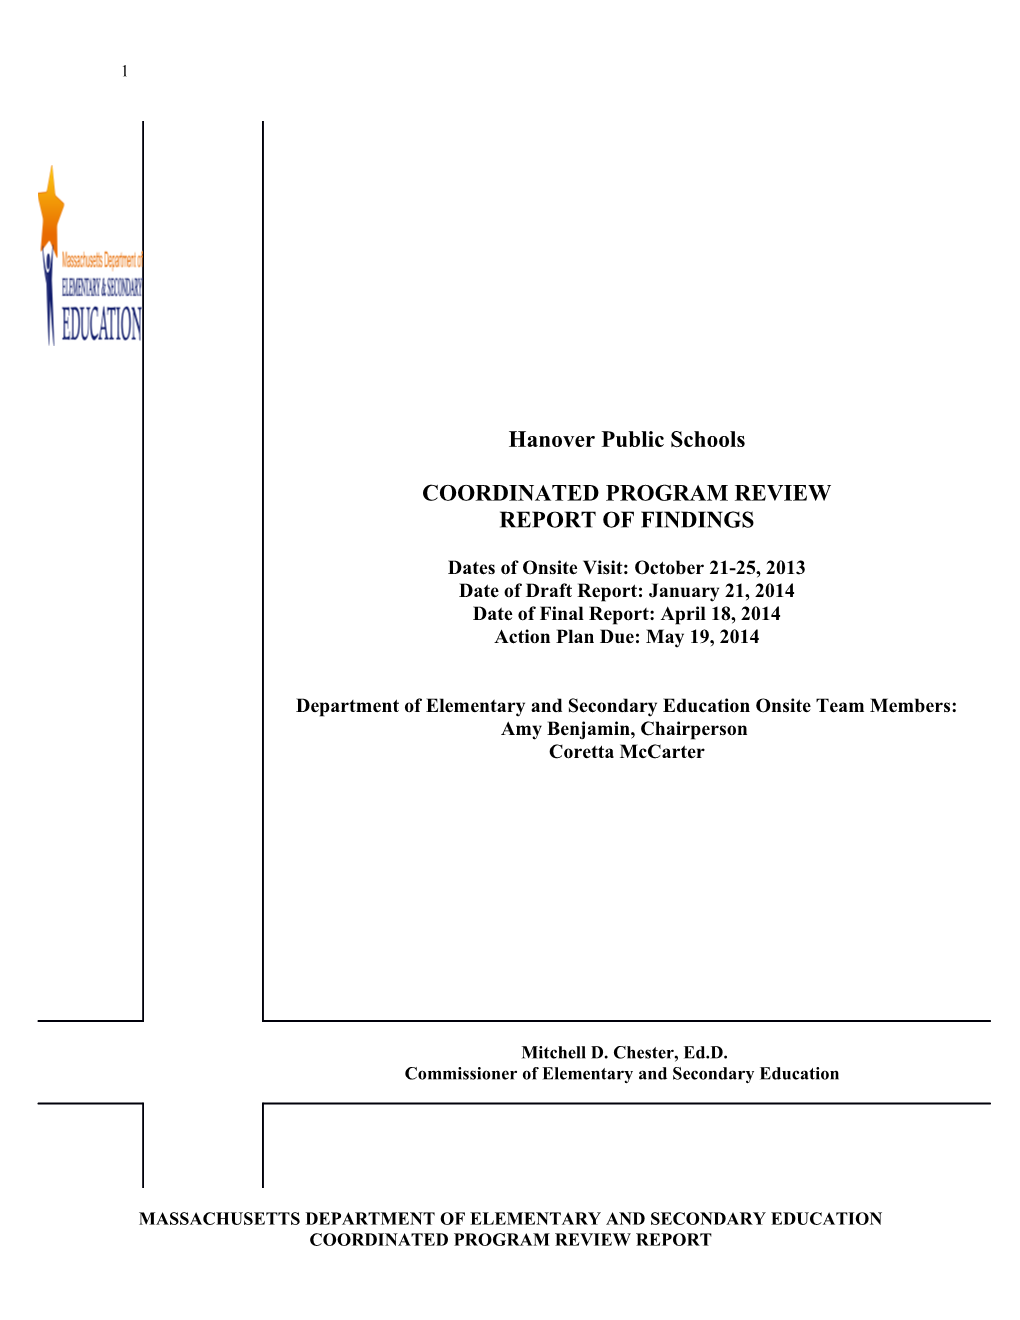 Hanover Public Schools CPR Final Report 2014